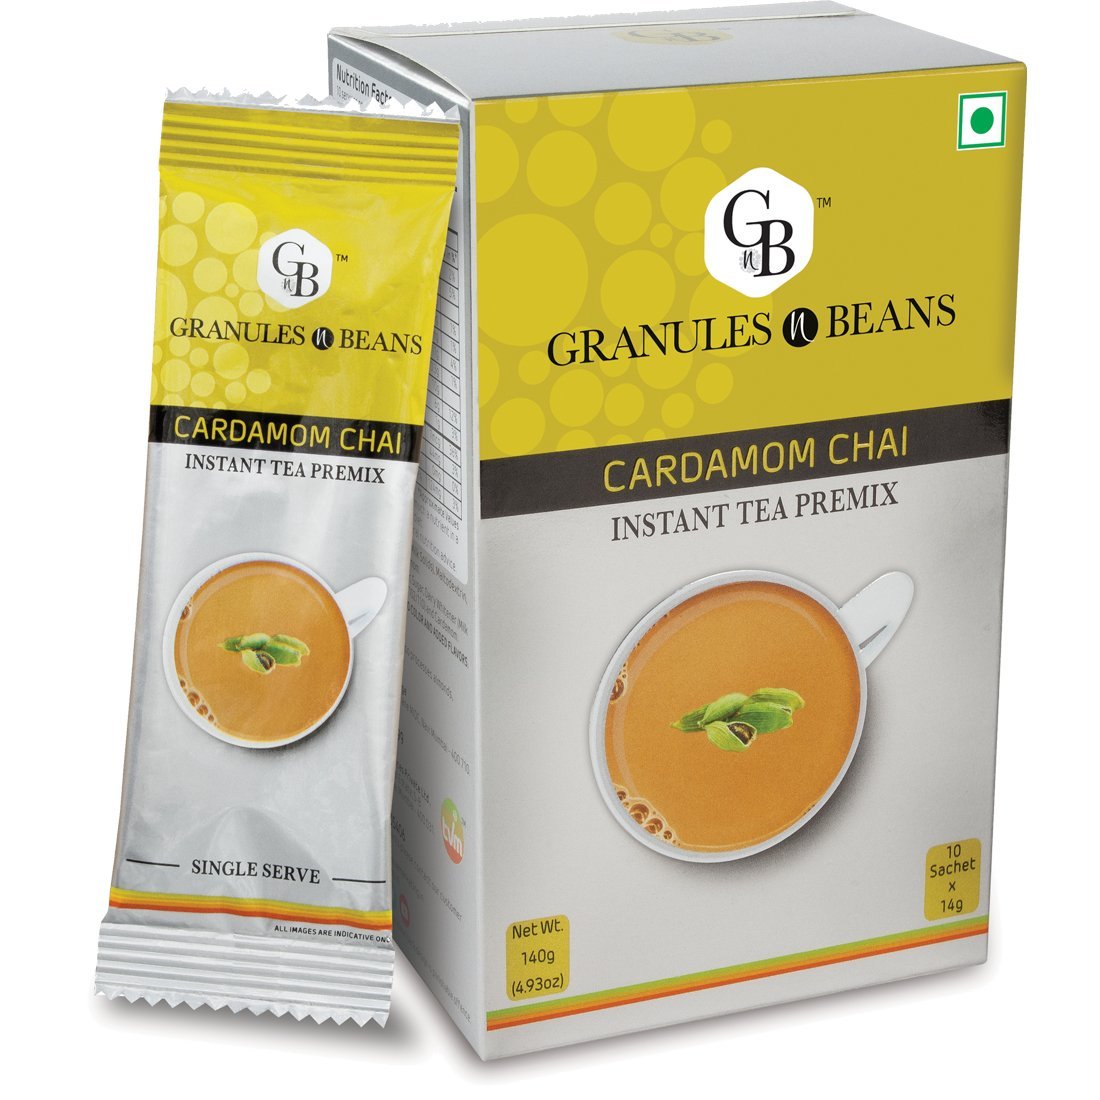 Granules n Beans Cardomom Chai Instant Tea Premix - (10 Sachet x 14g = 140g) (Pack of 2)